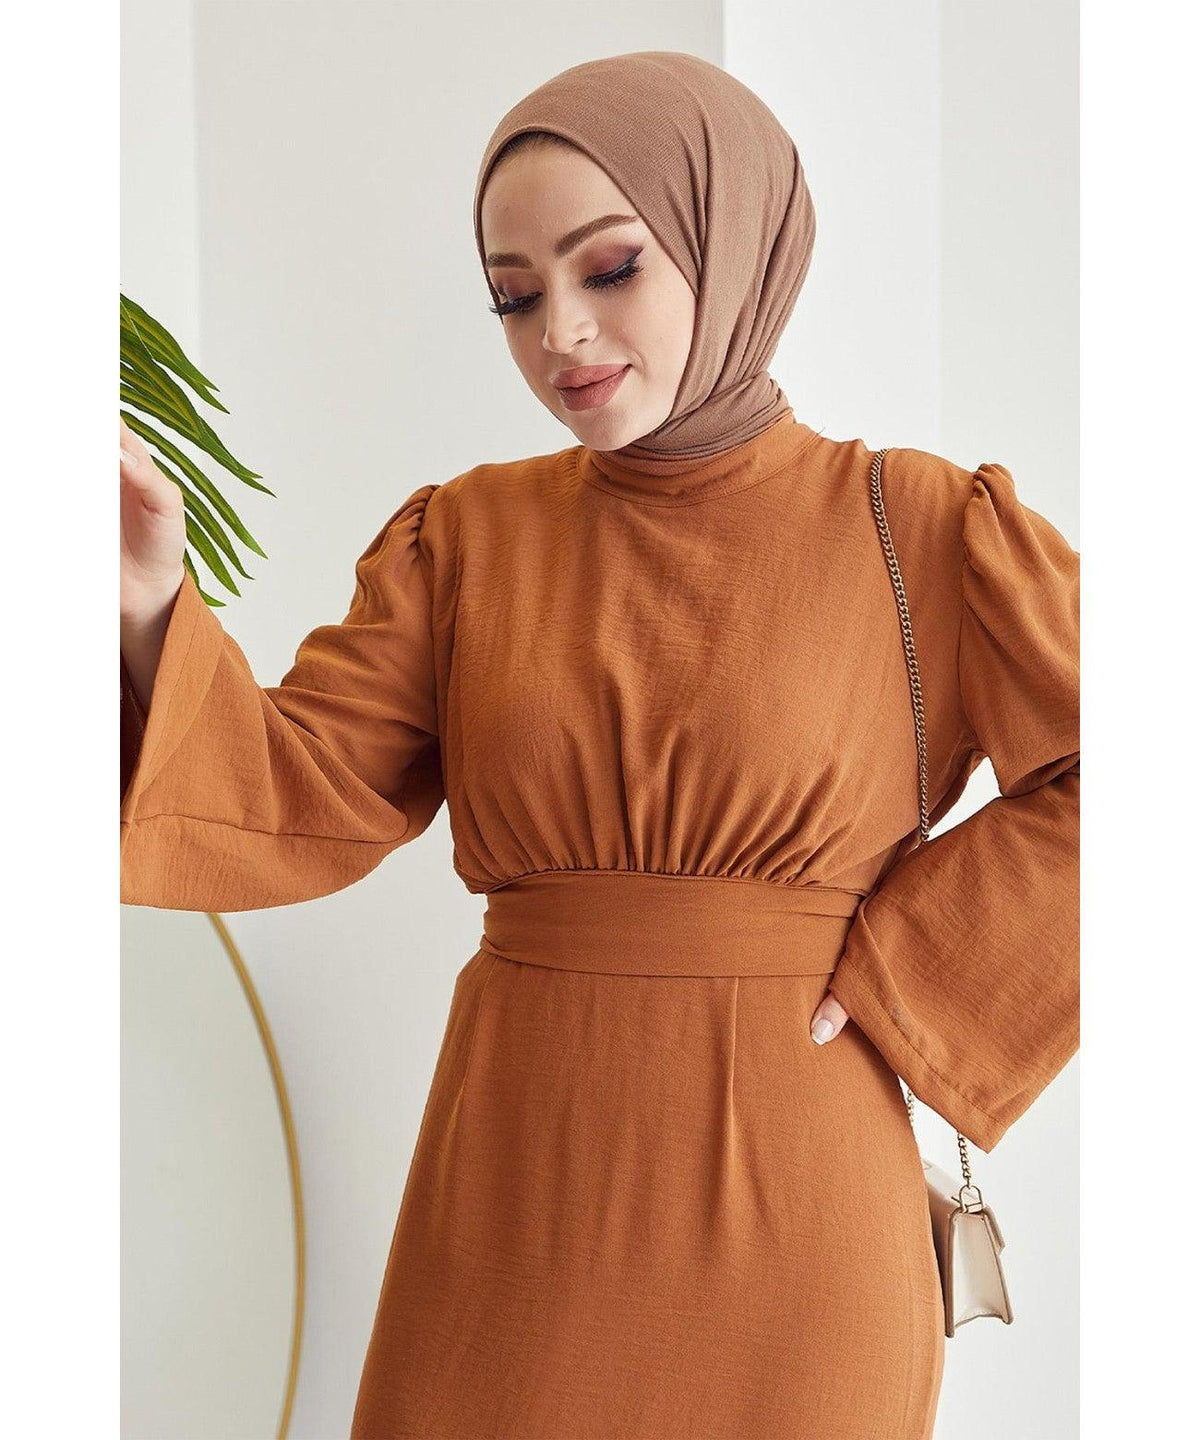 Belted Abaya Dress for Women - Orange